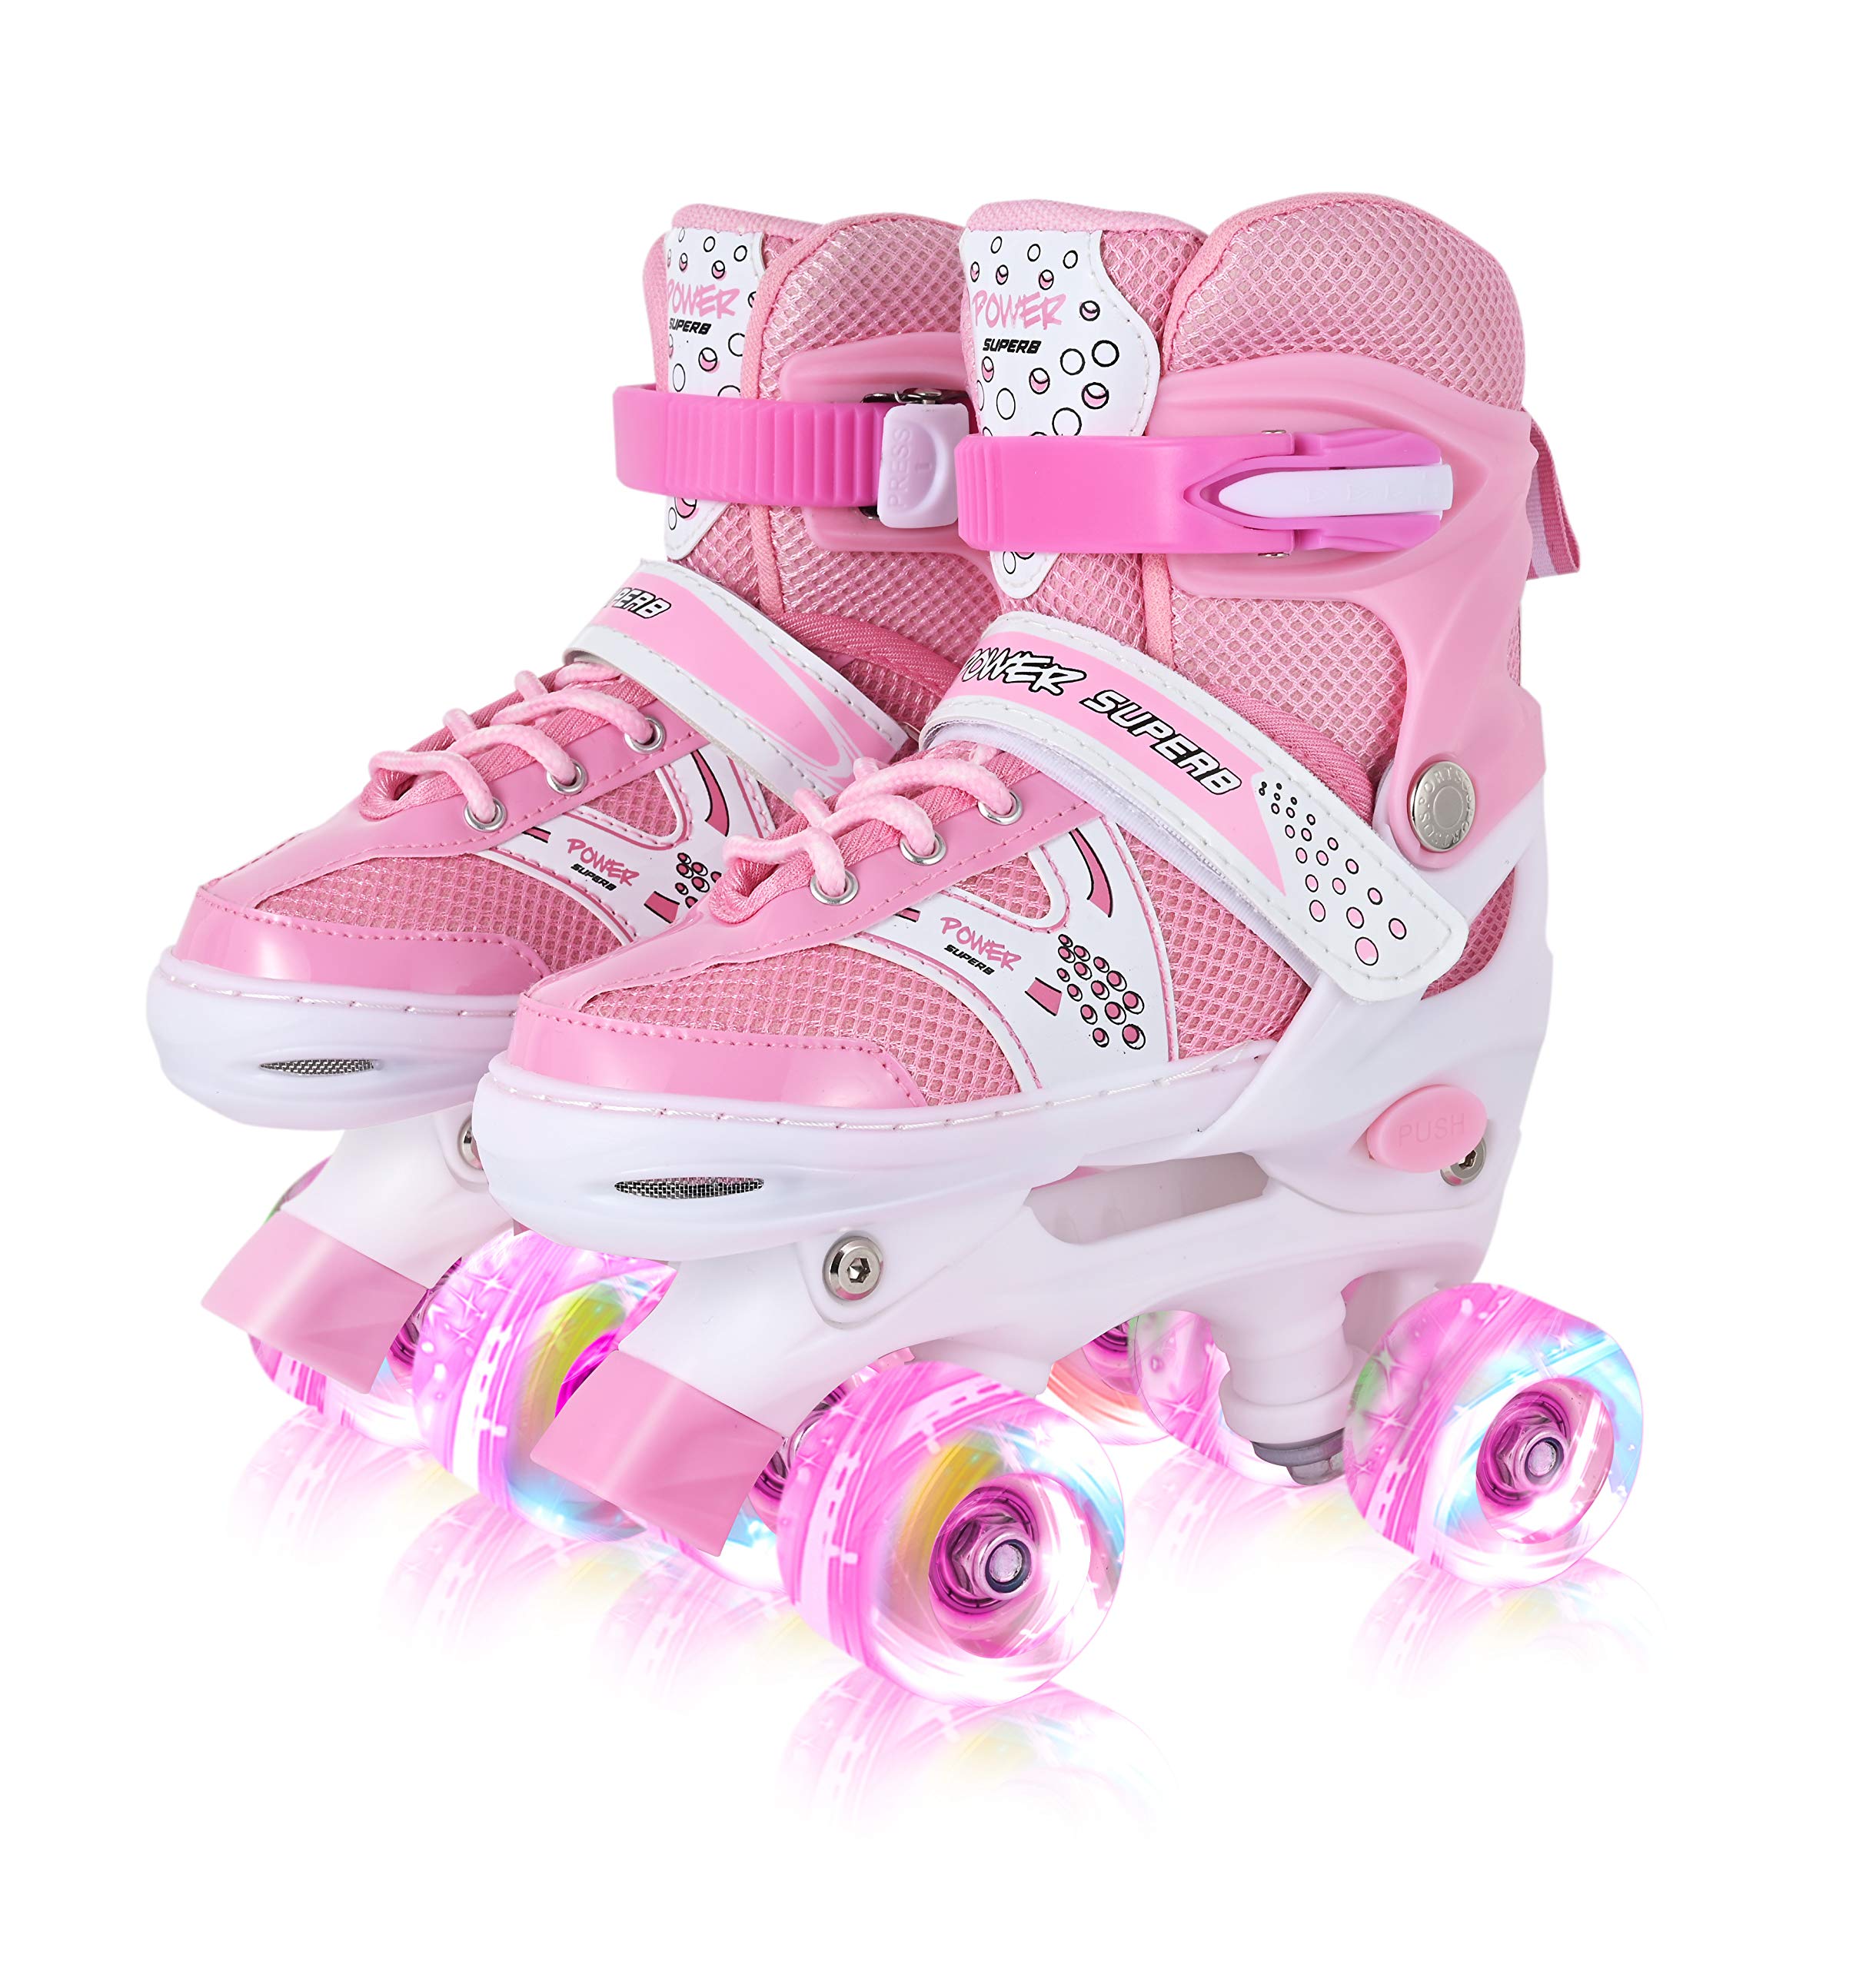 4 Size Adjustable Roller Skates for Girls Boys, Kids Roller Skates with  Full Light Up Wheels,Girls Roller Skates for Kids Toddler,Illuminating  Purple